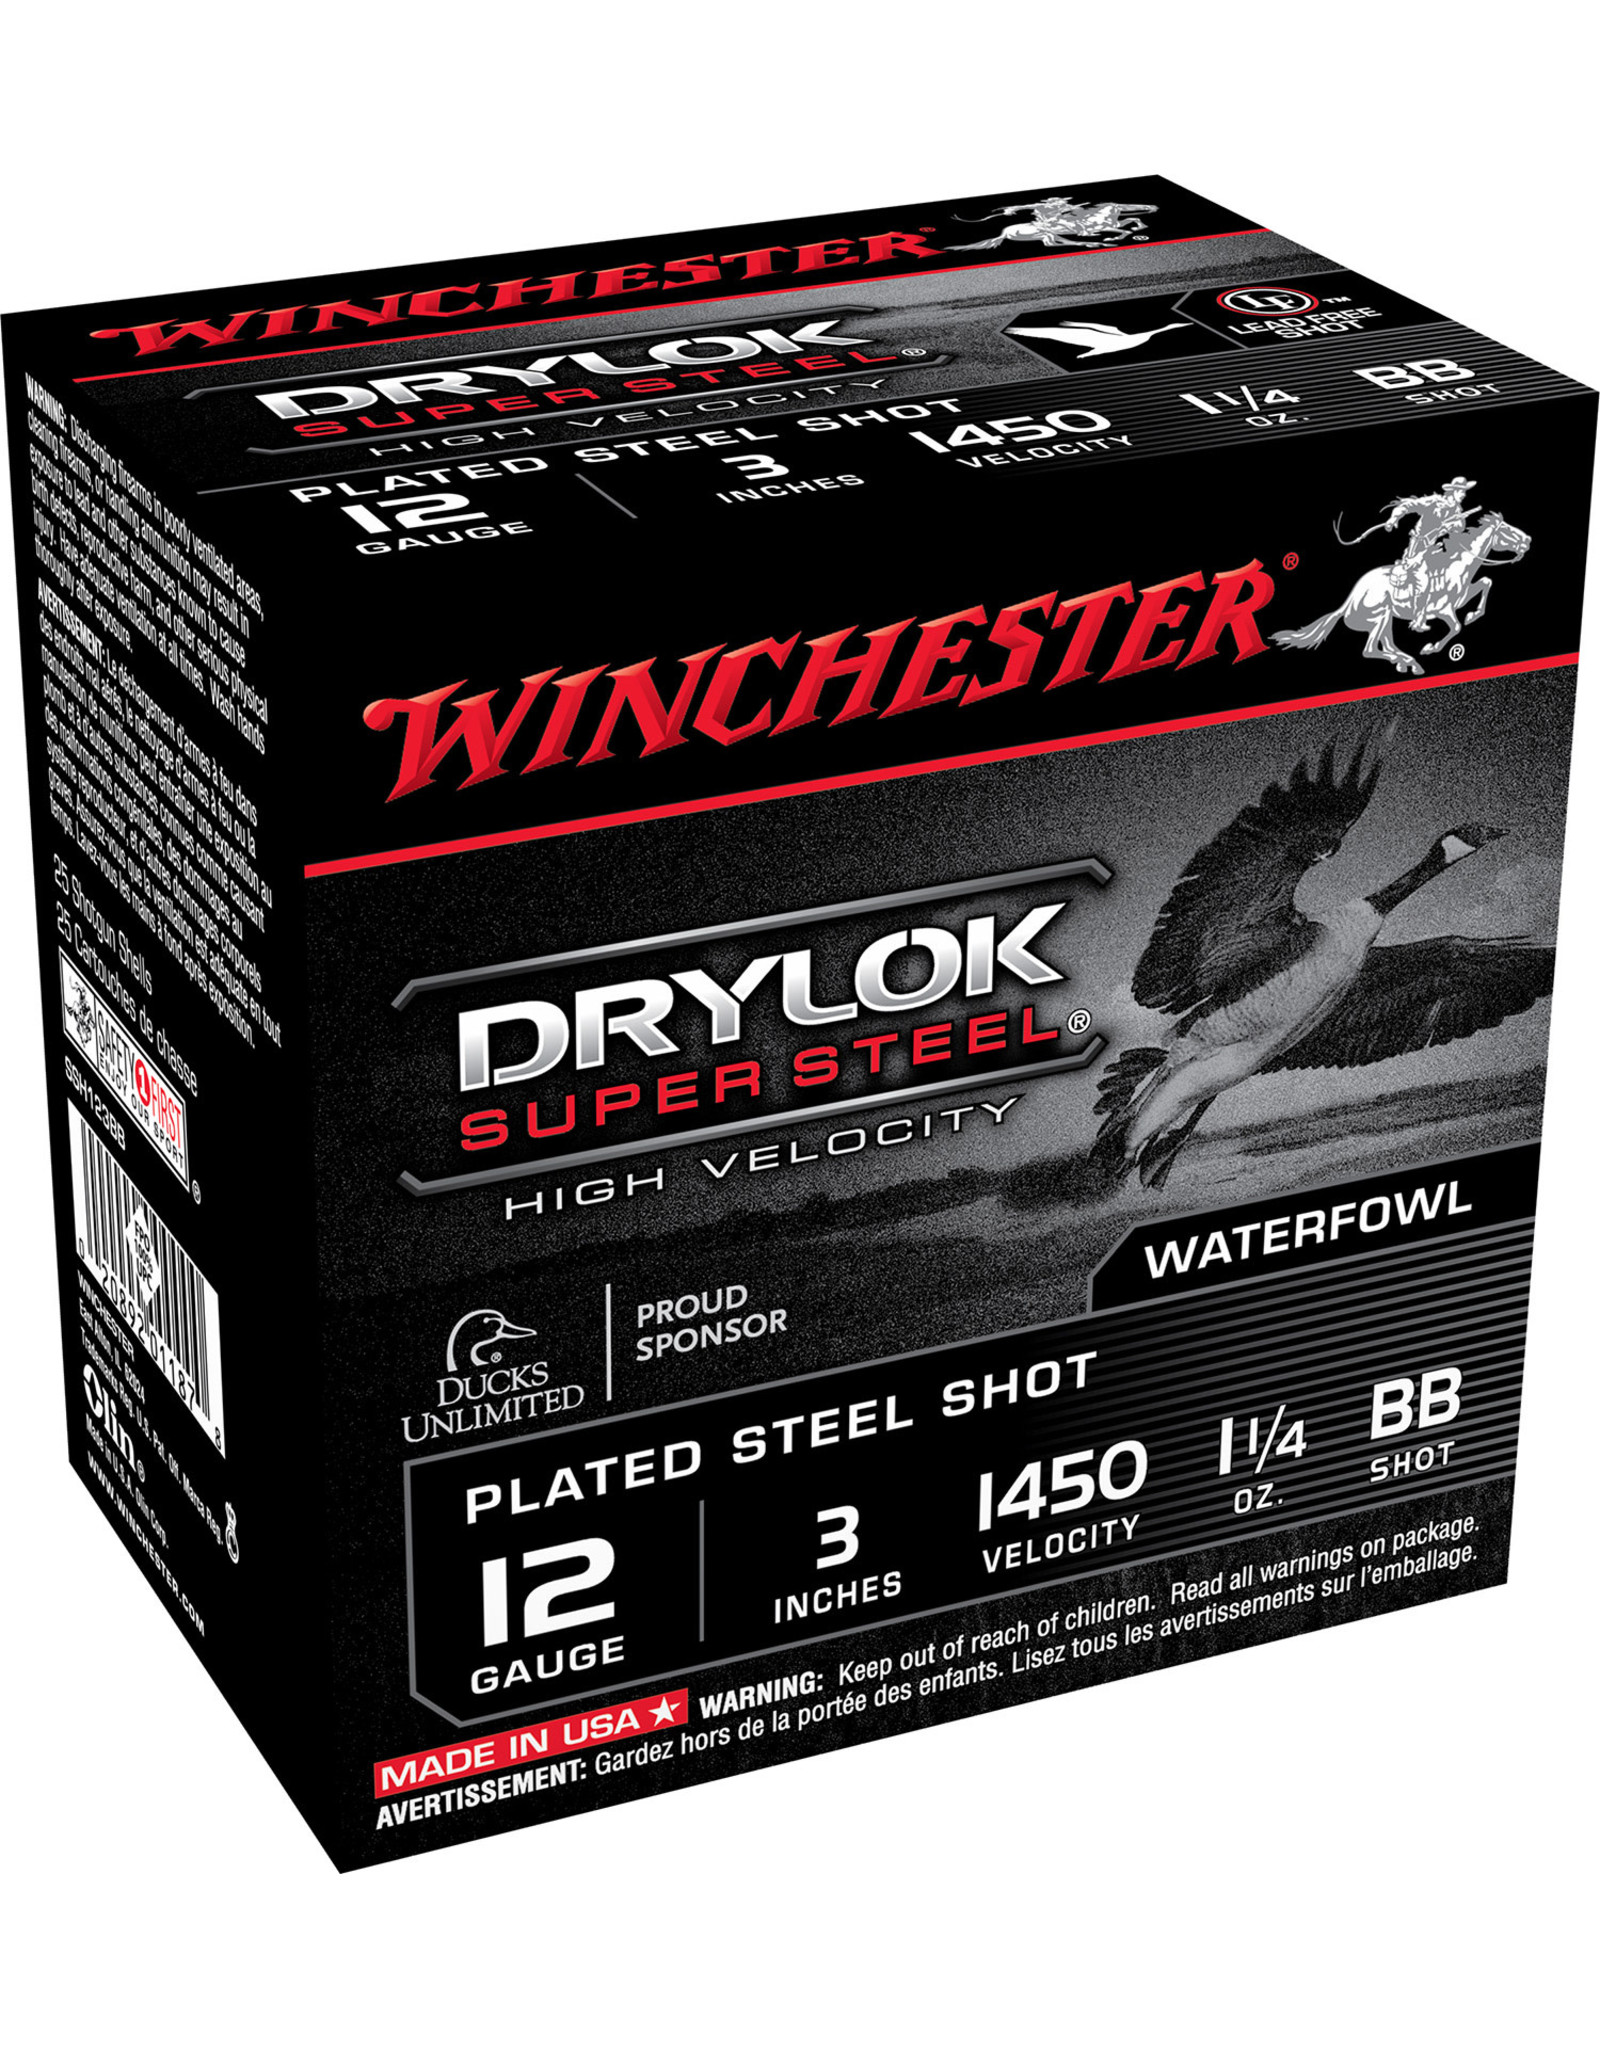 WINCHESTER Winchester Drylok Super Steel 12 Ga 3" 1-1/4 Oz #bb 1450 FPS - 25 Count